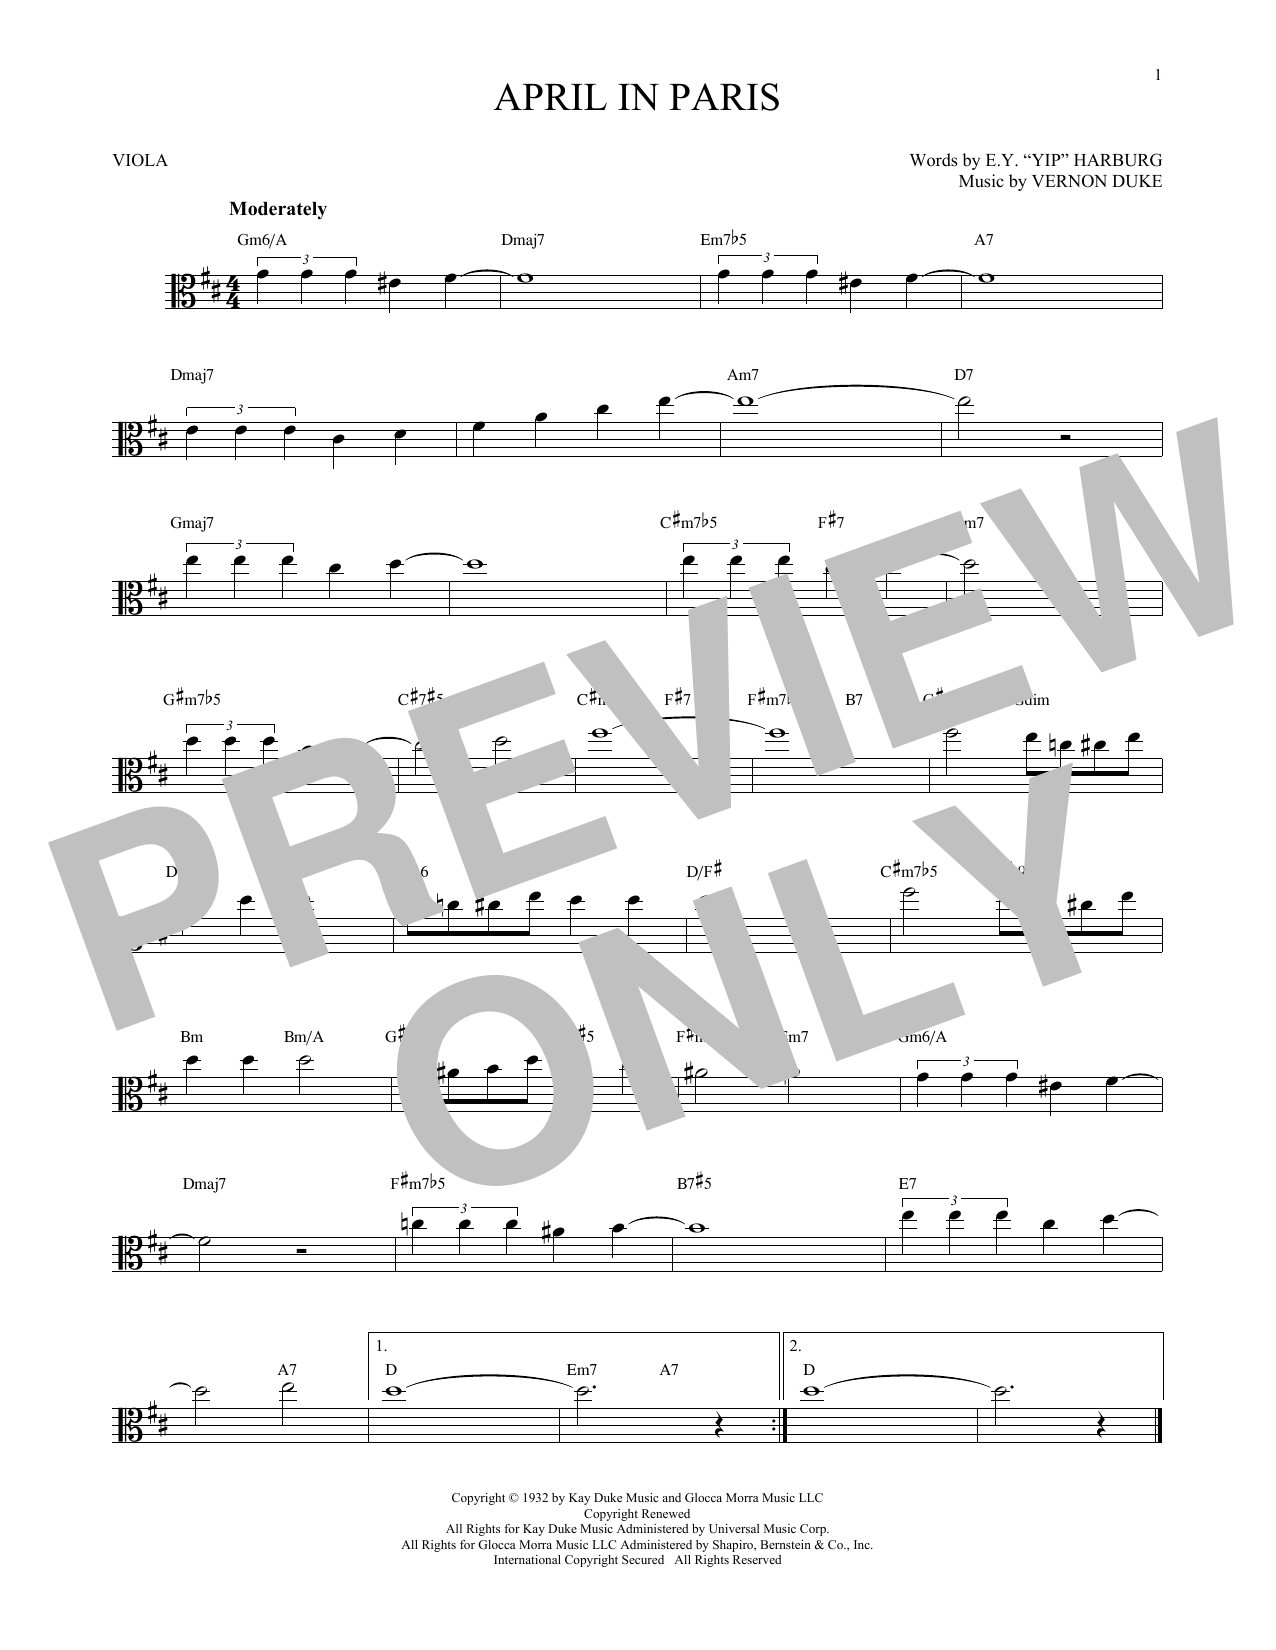 Vernon Duke April In Paris Sheet Music Notes & Chords for Viola - Download or Print PDF